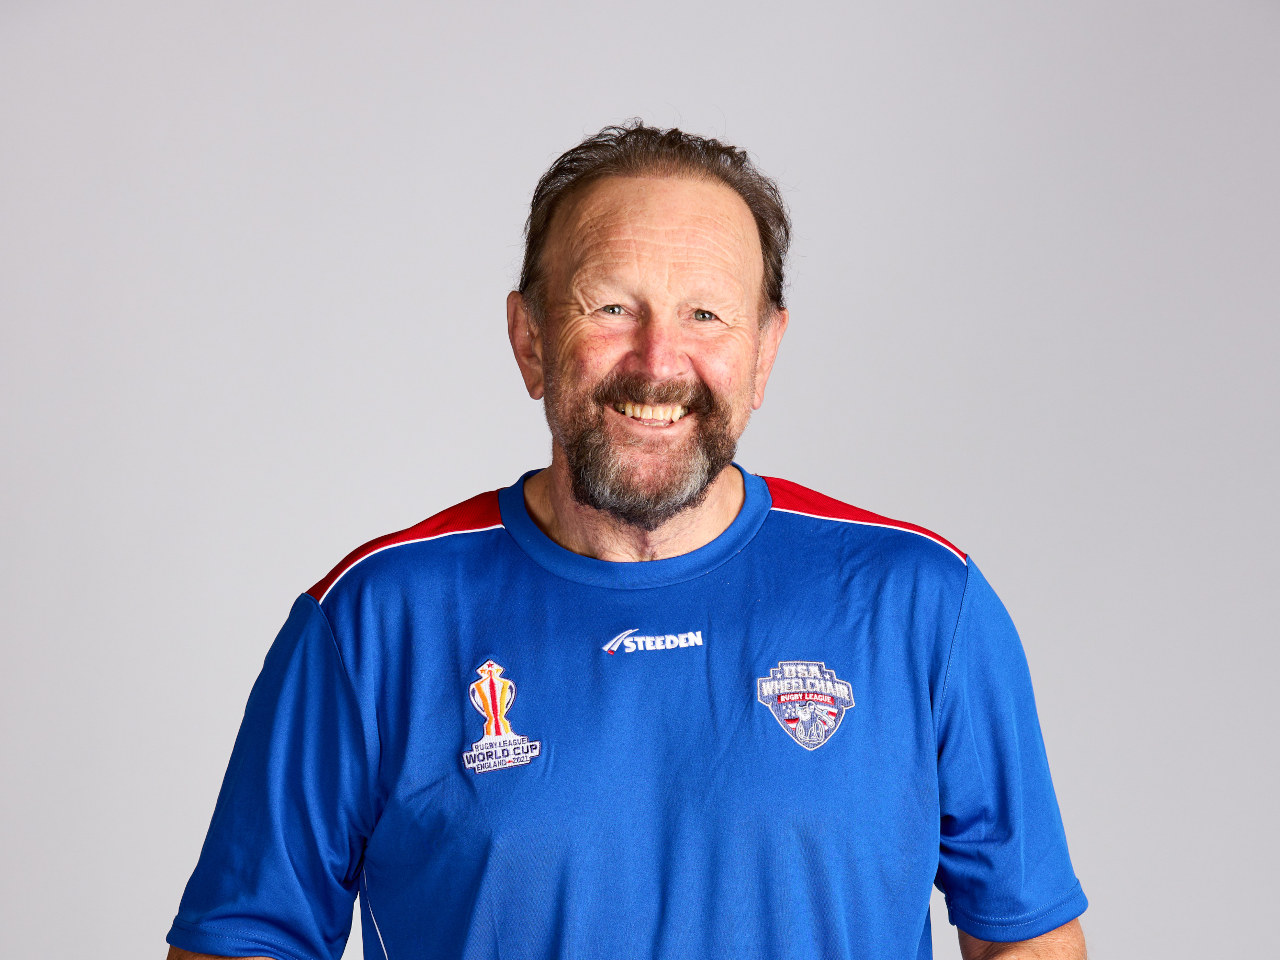 USARL Inc. Welcomes Geoff Mason as Head Coach of the USA Hawks Wheelchair Rugby League Team